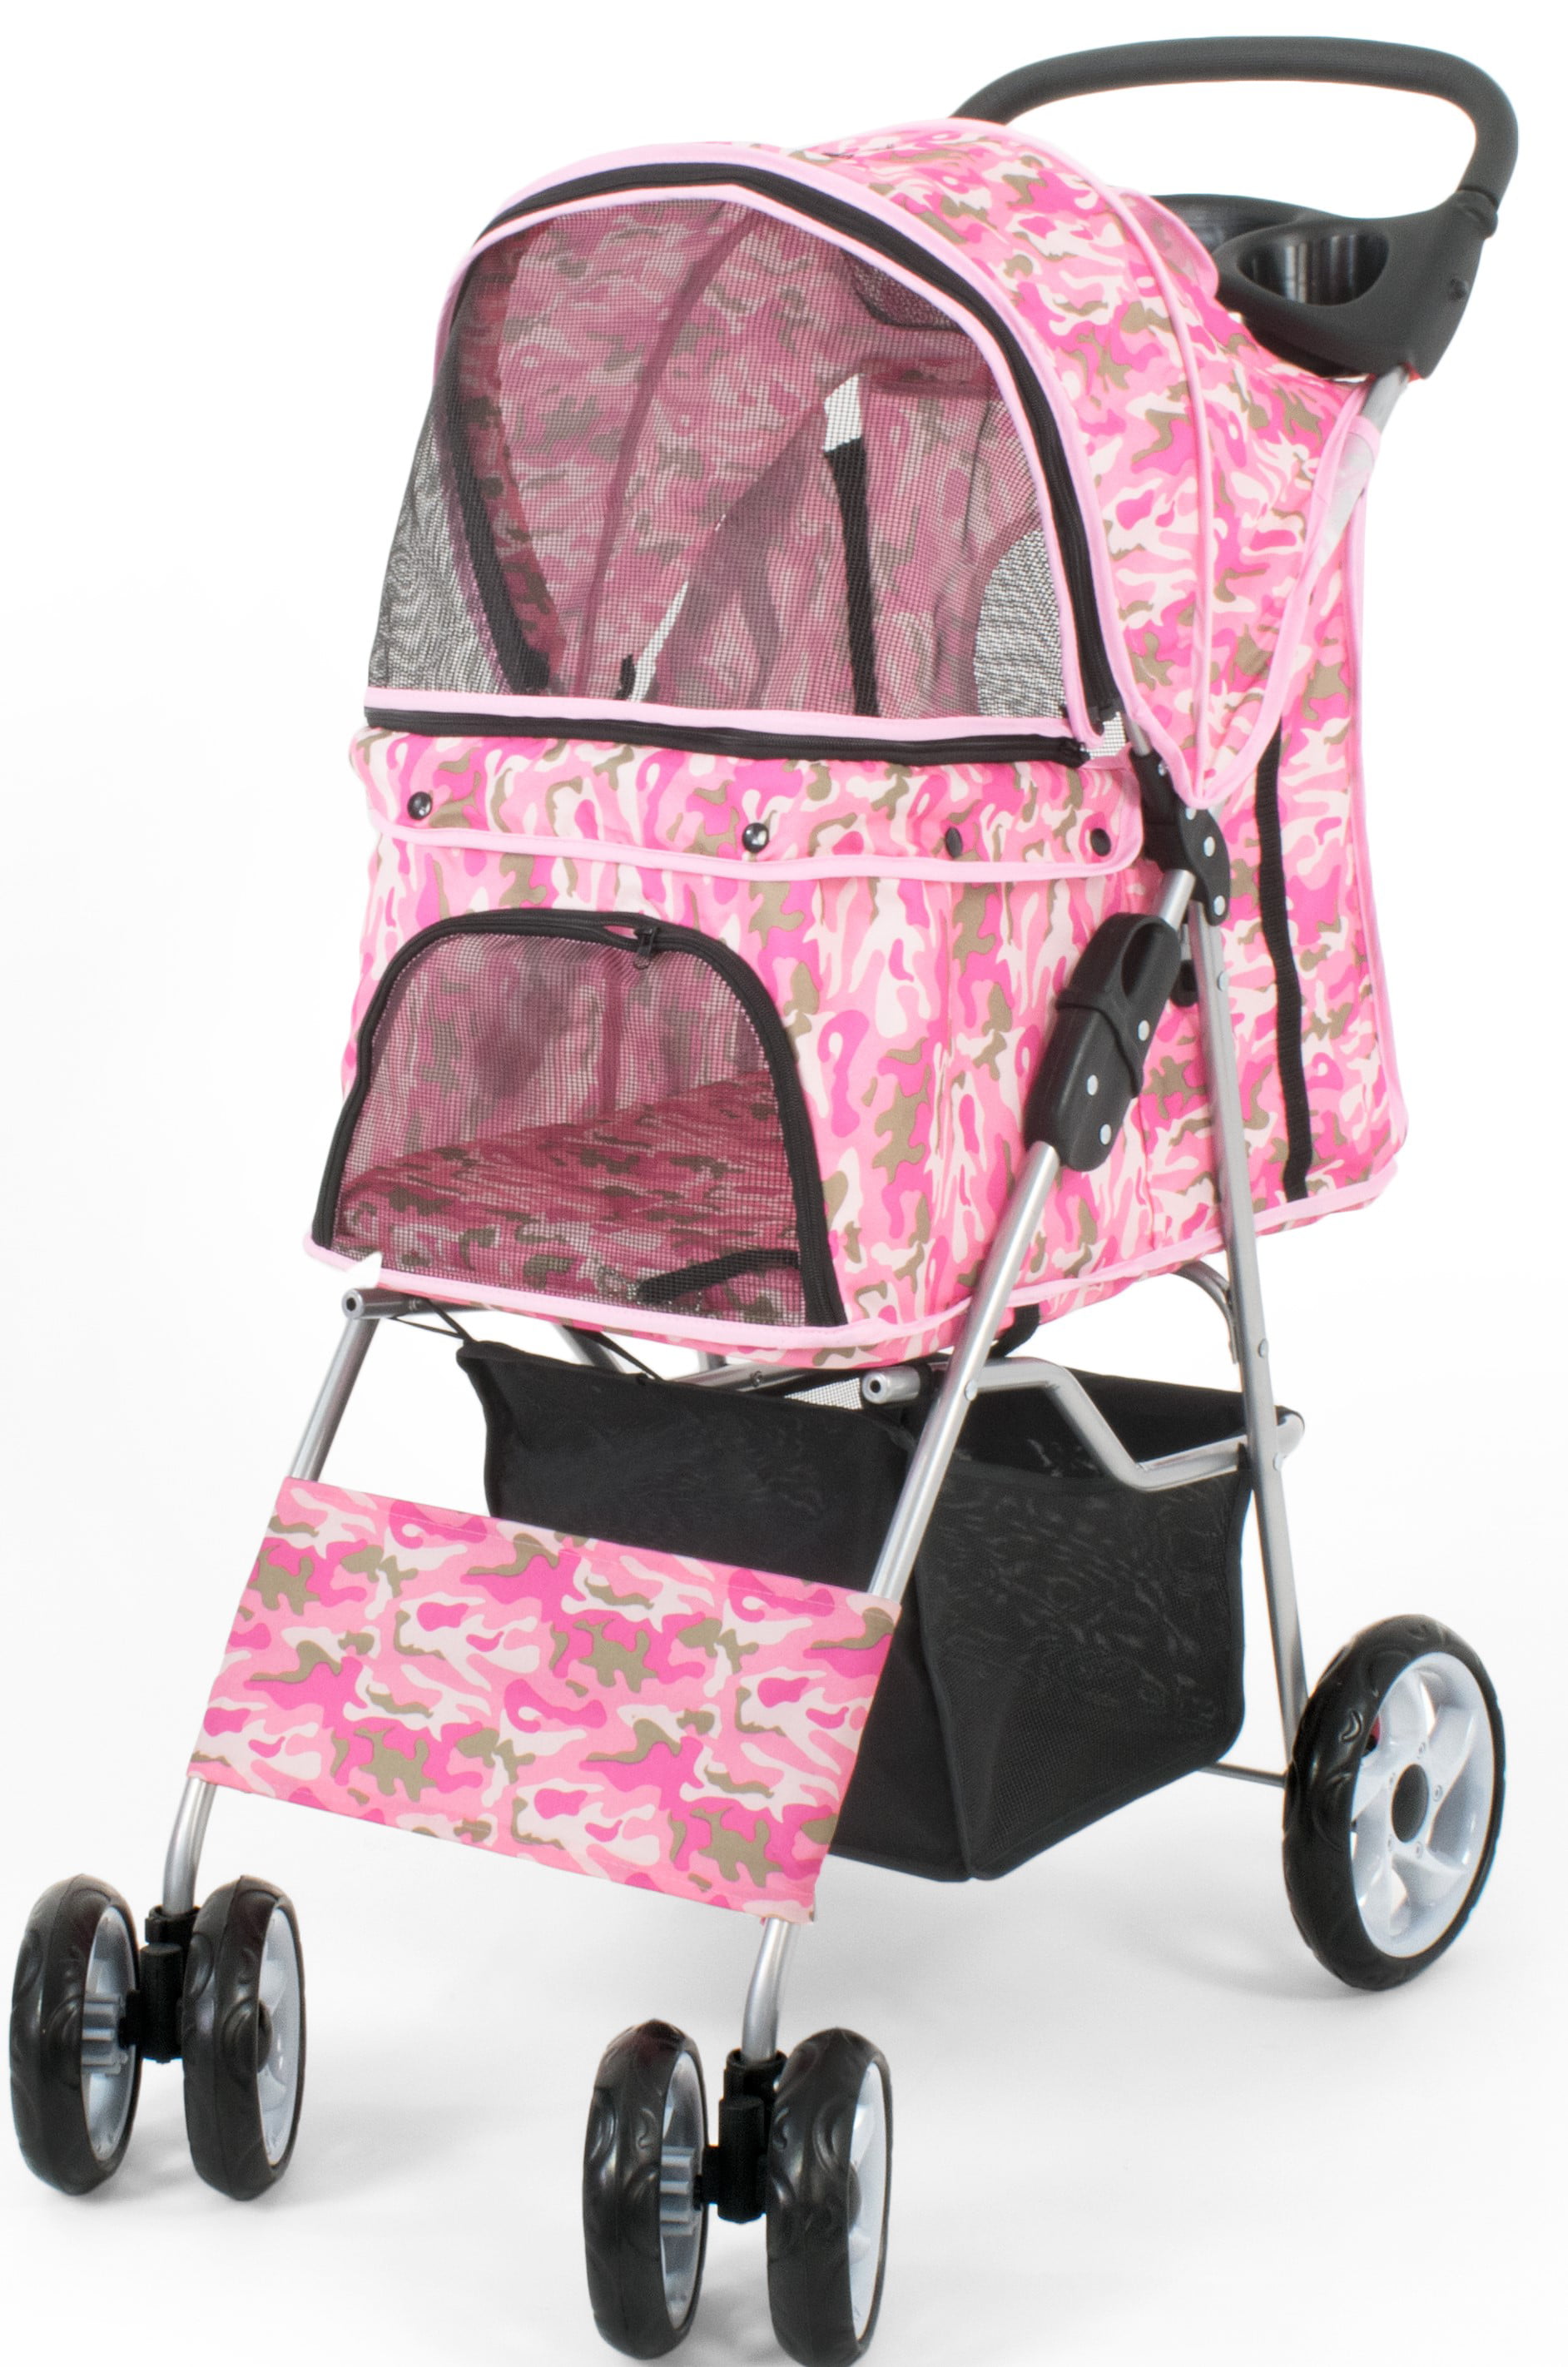 4 wheel pet stroller